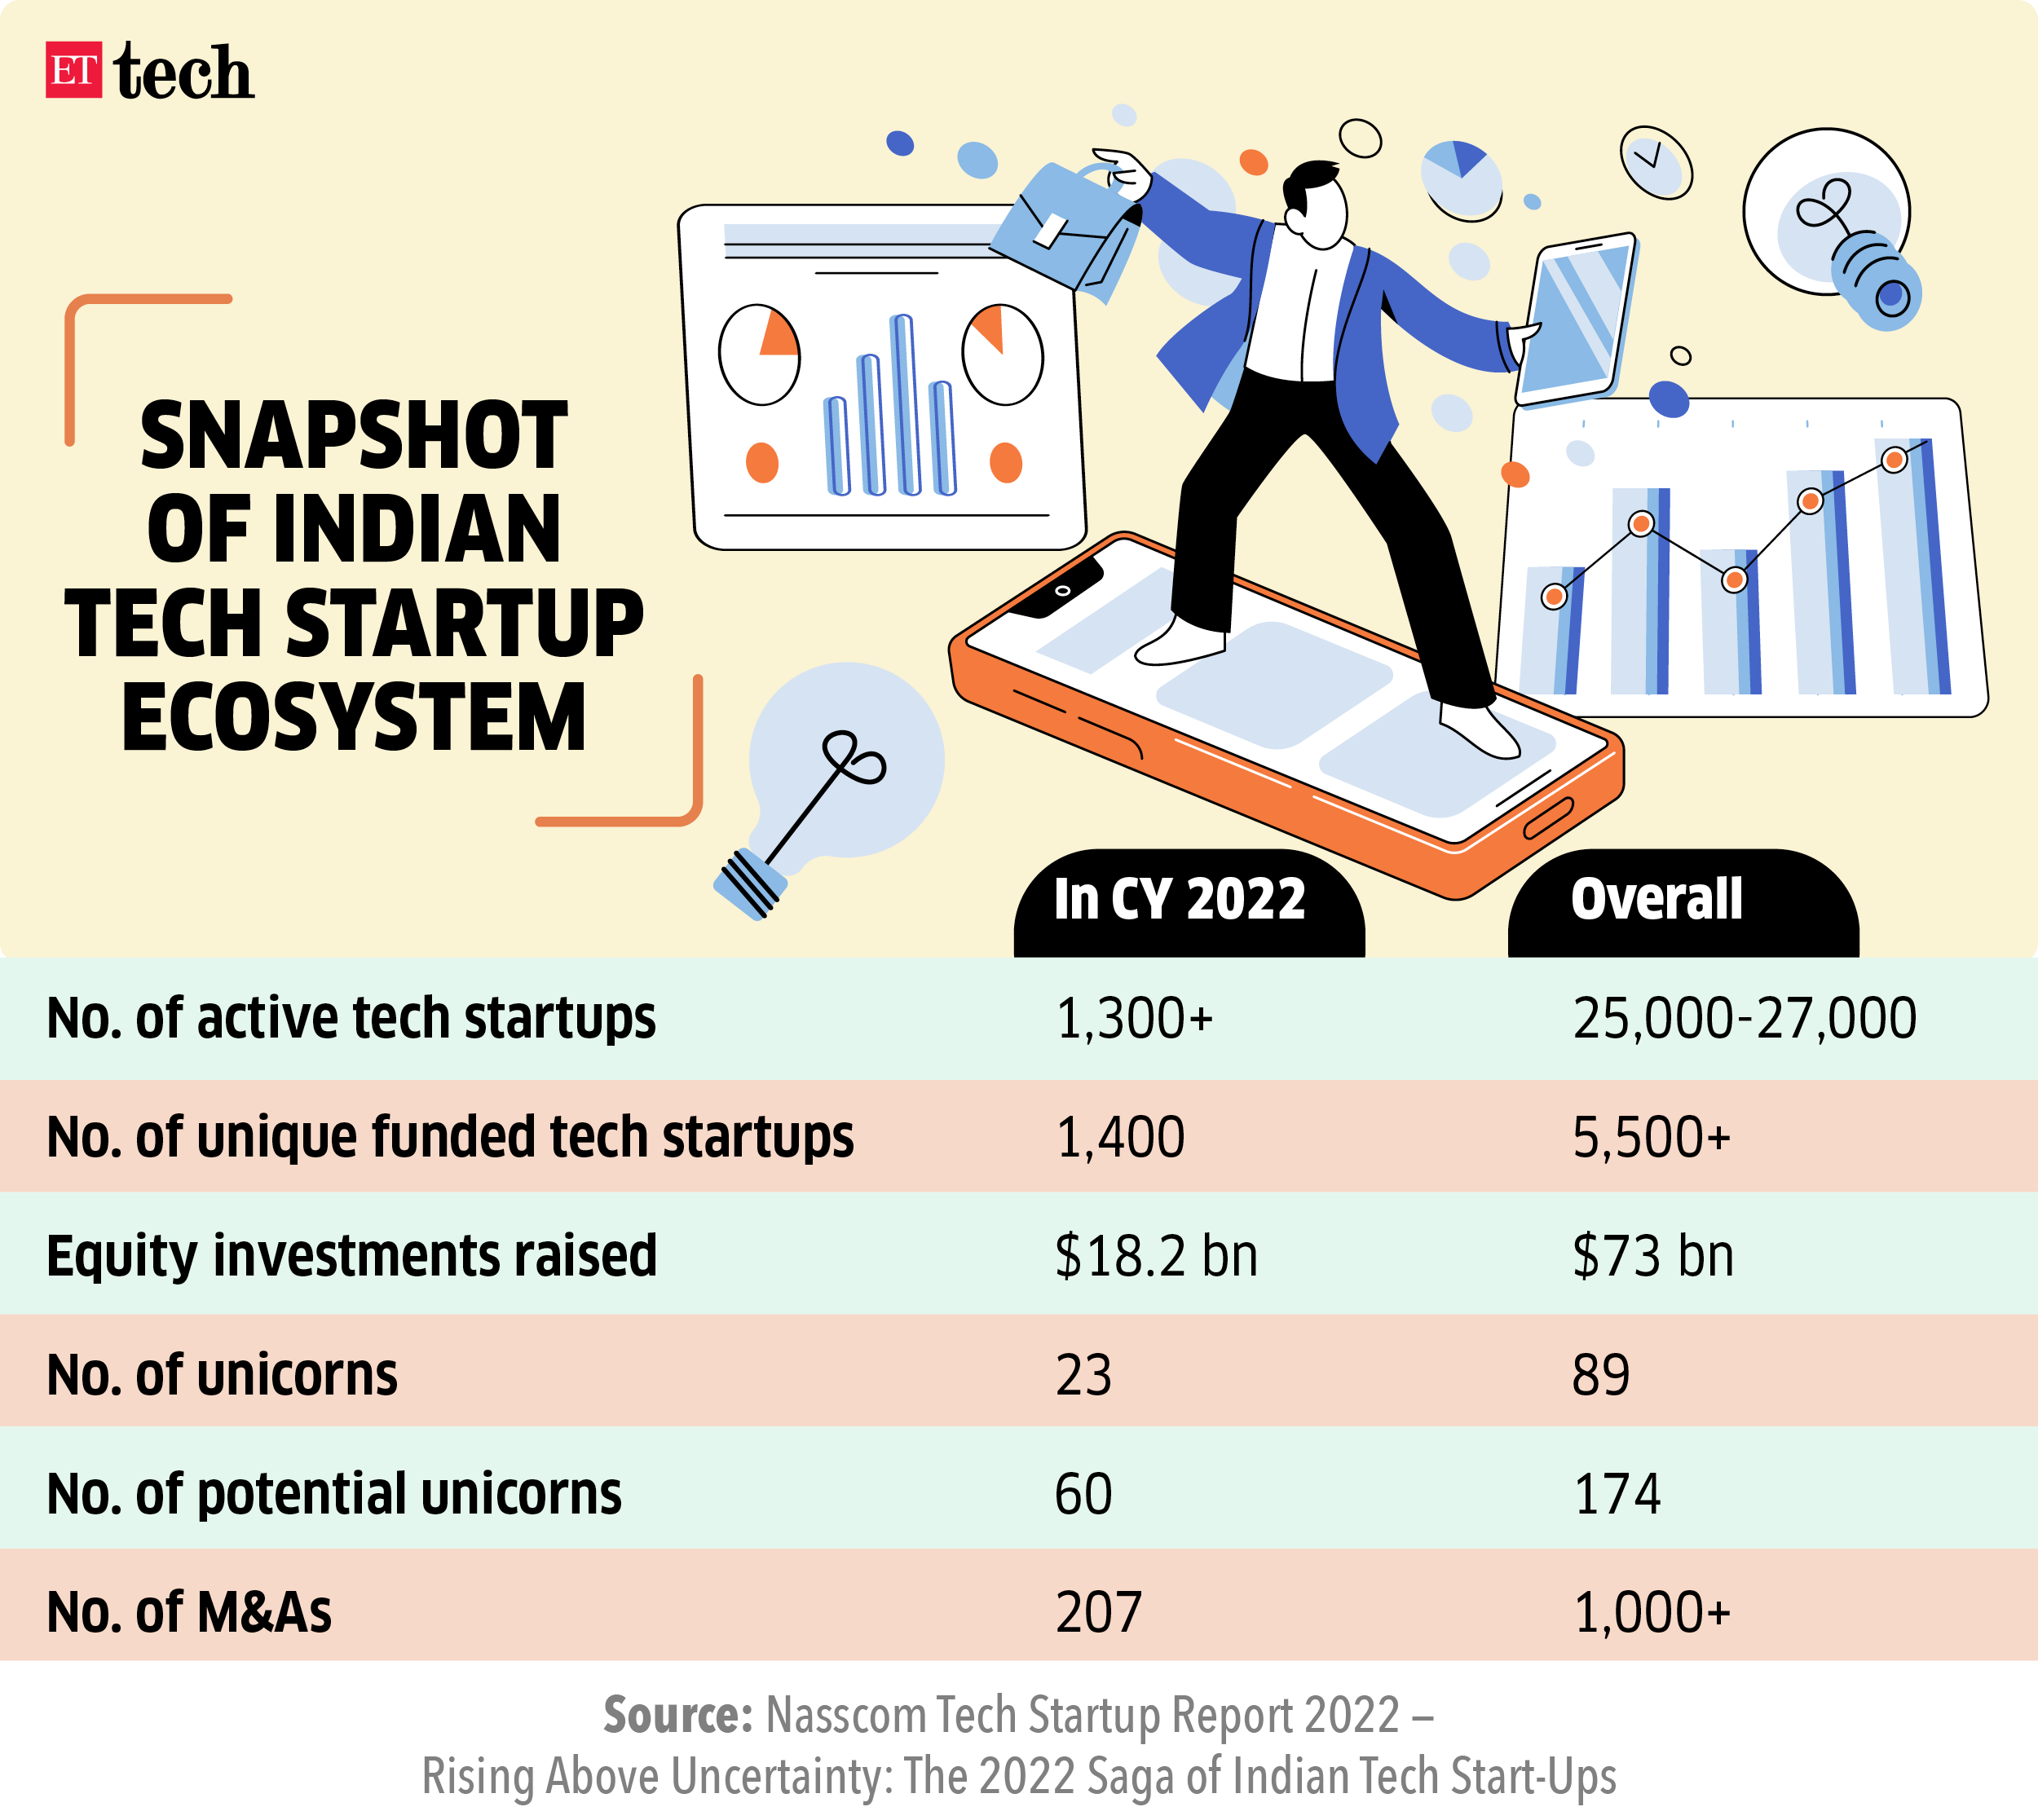 Snapshot of Indian tech startup ecosystem